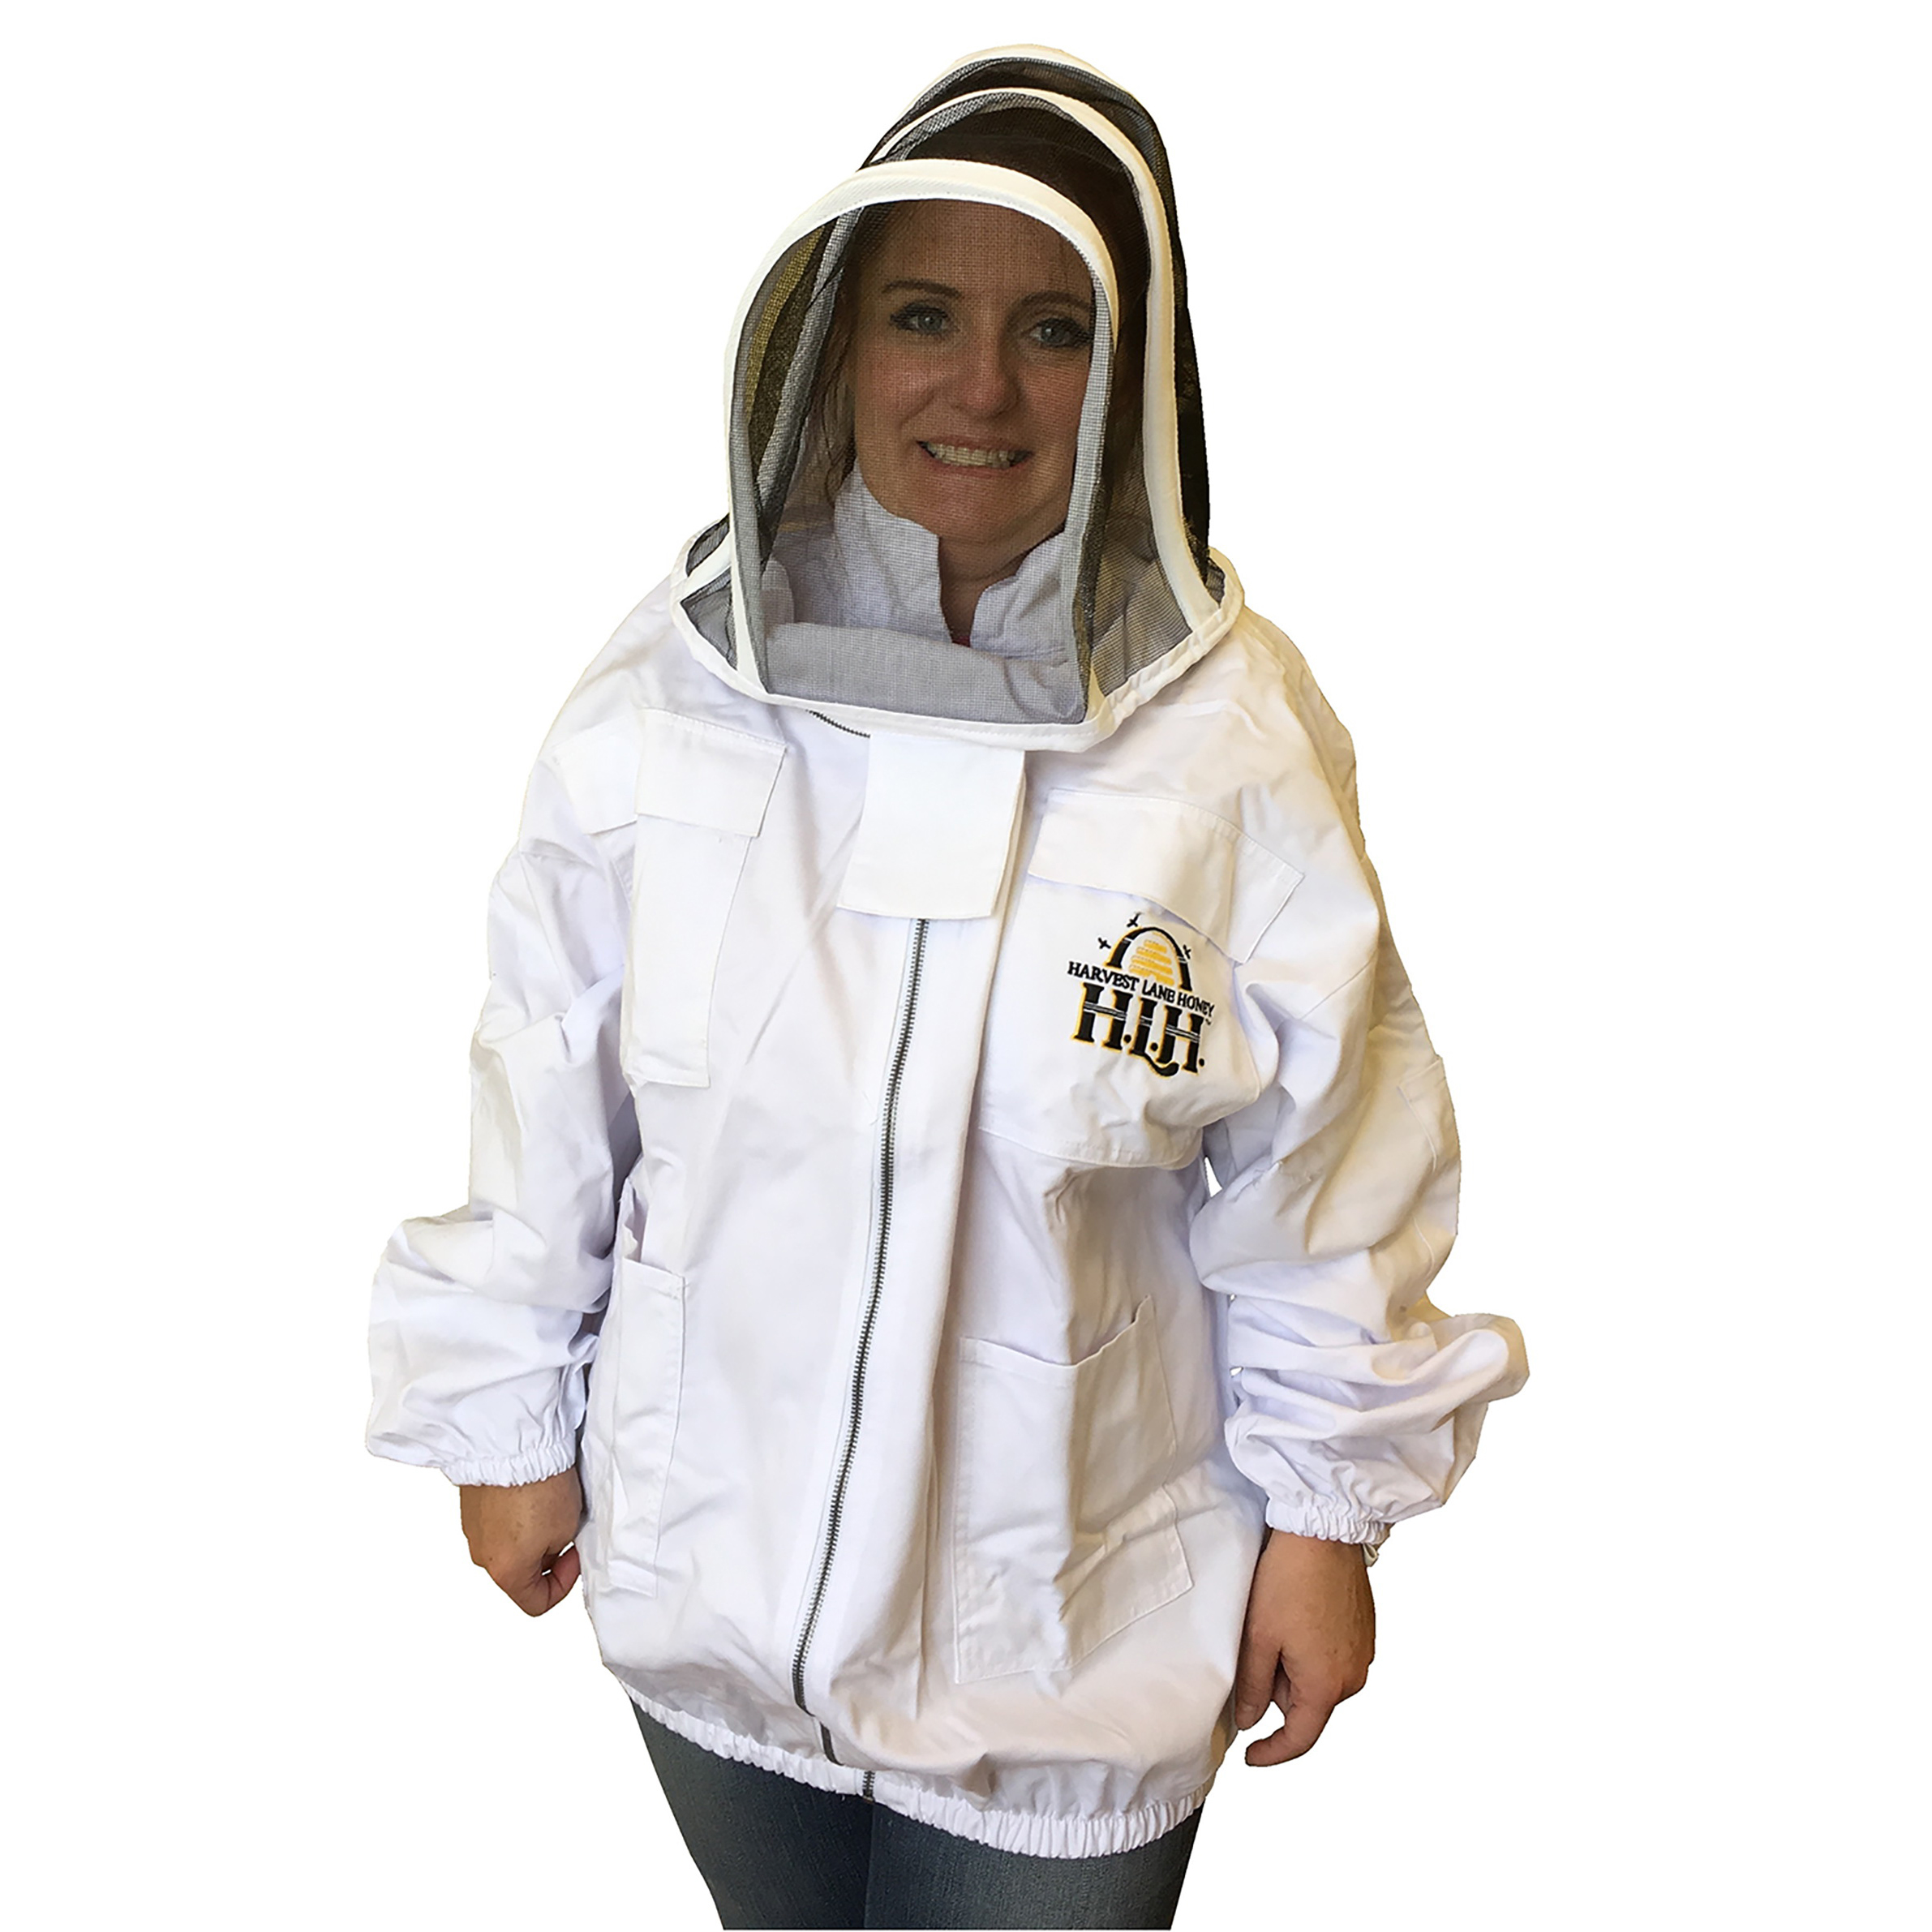 CLOTHSJXXL-102 Beekeeper Jacket with Hood, 2XL, Zipper, Polycotton, White